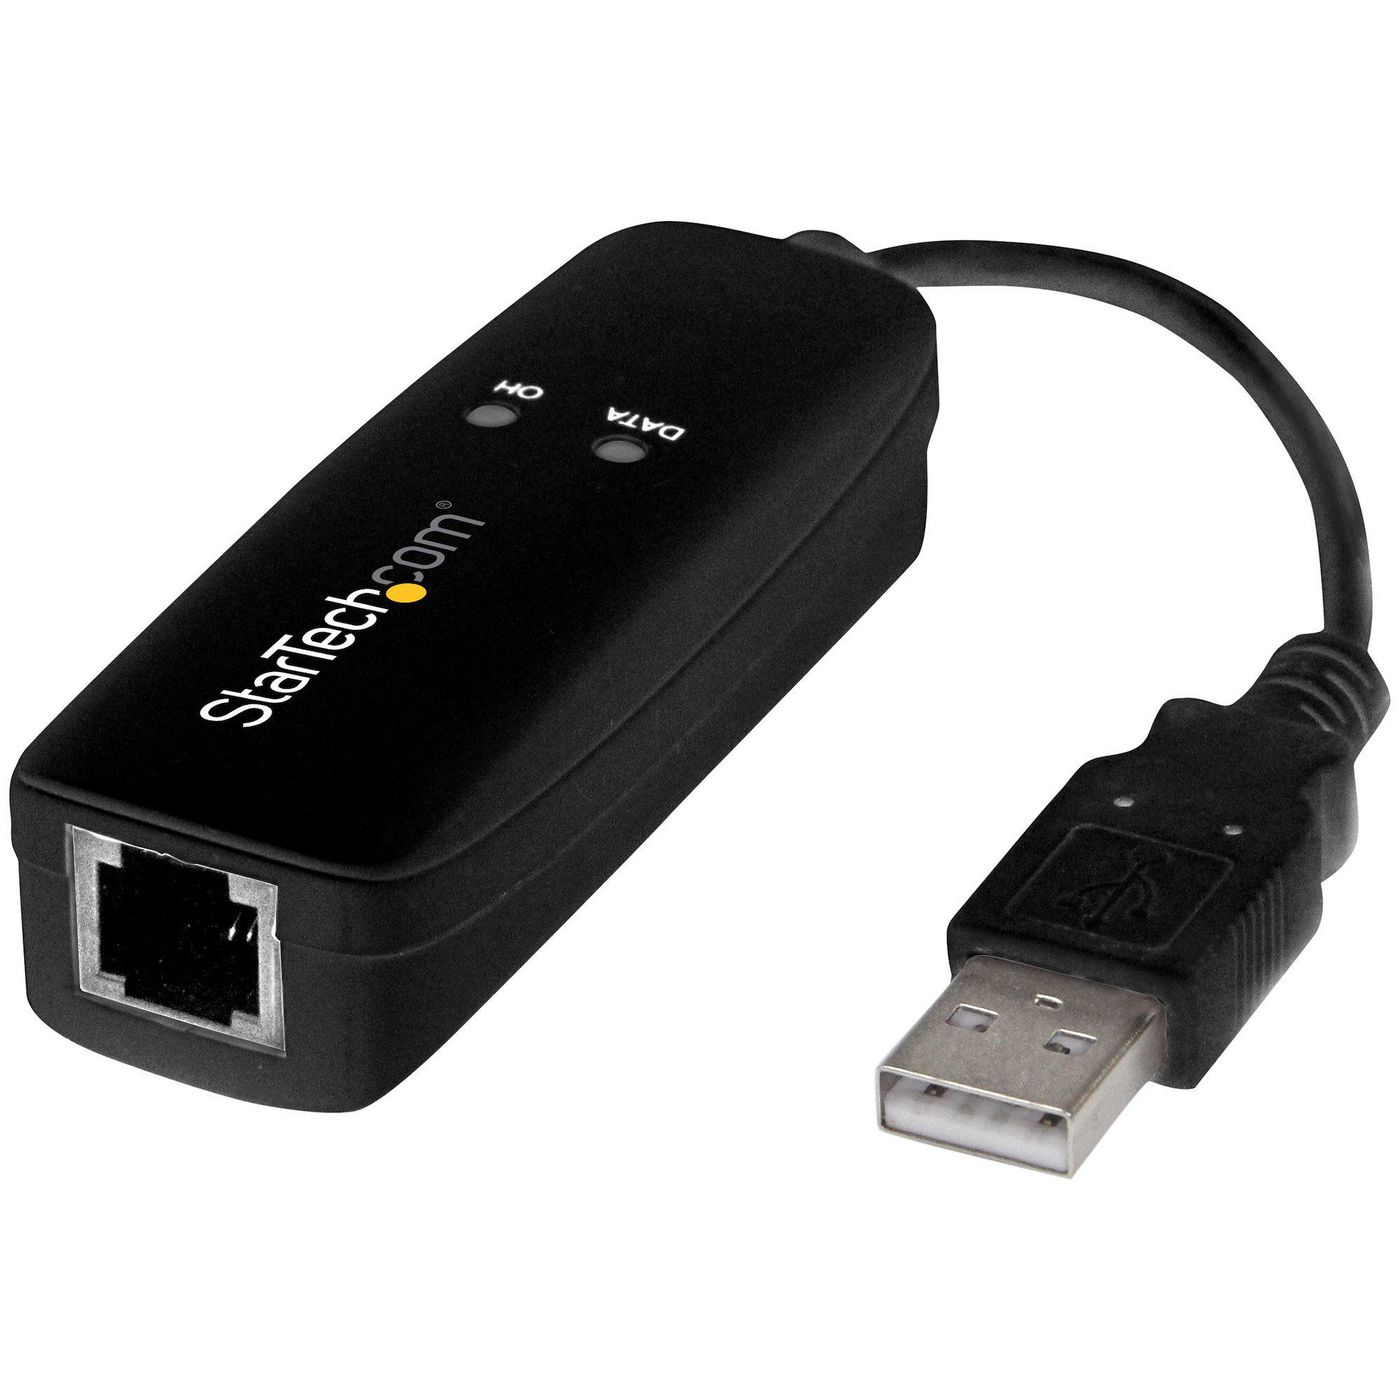 StarTechcom USB56KEMH2 56K USB Fax Modem 